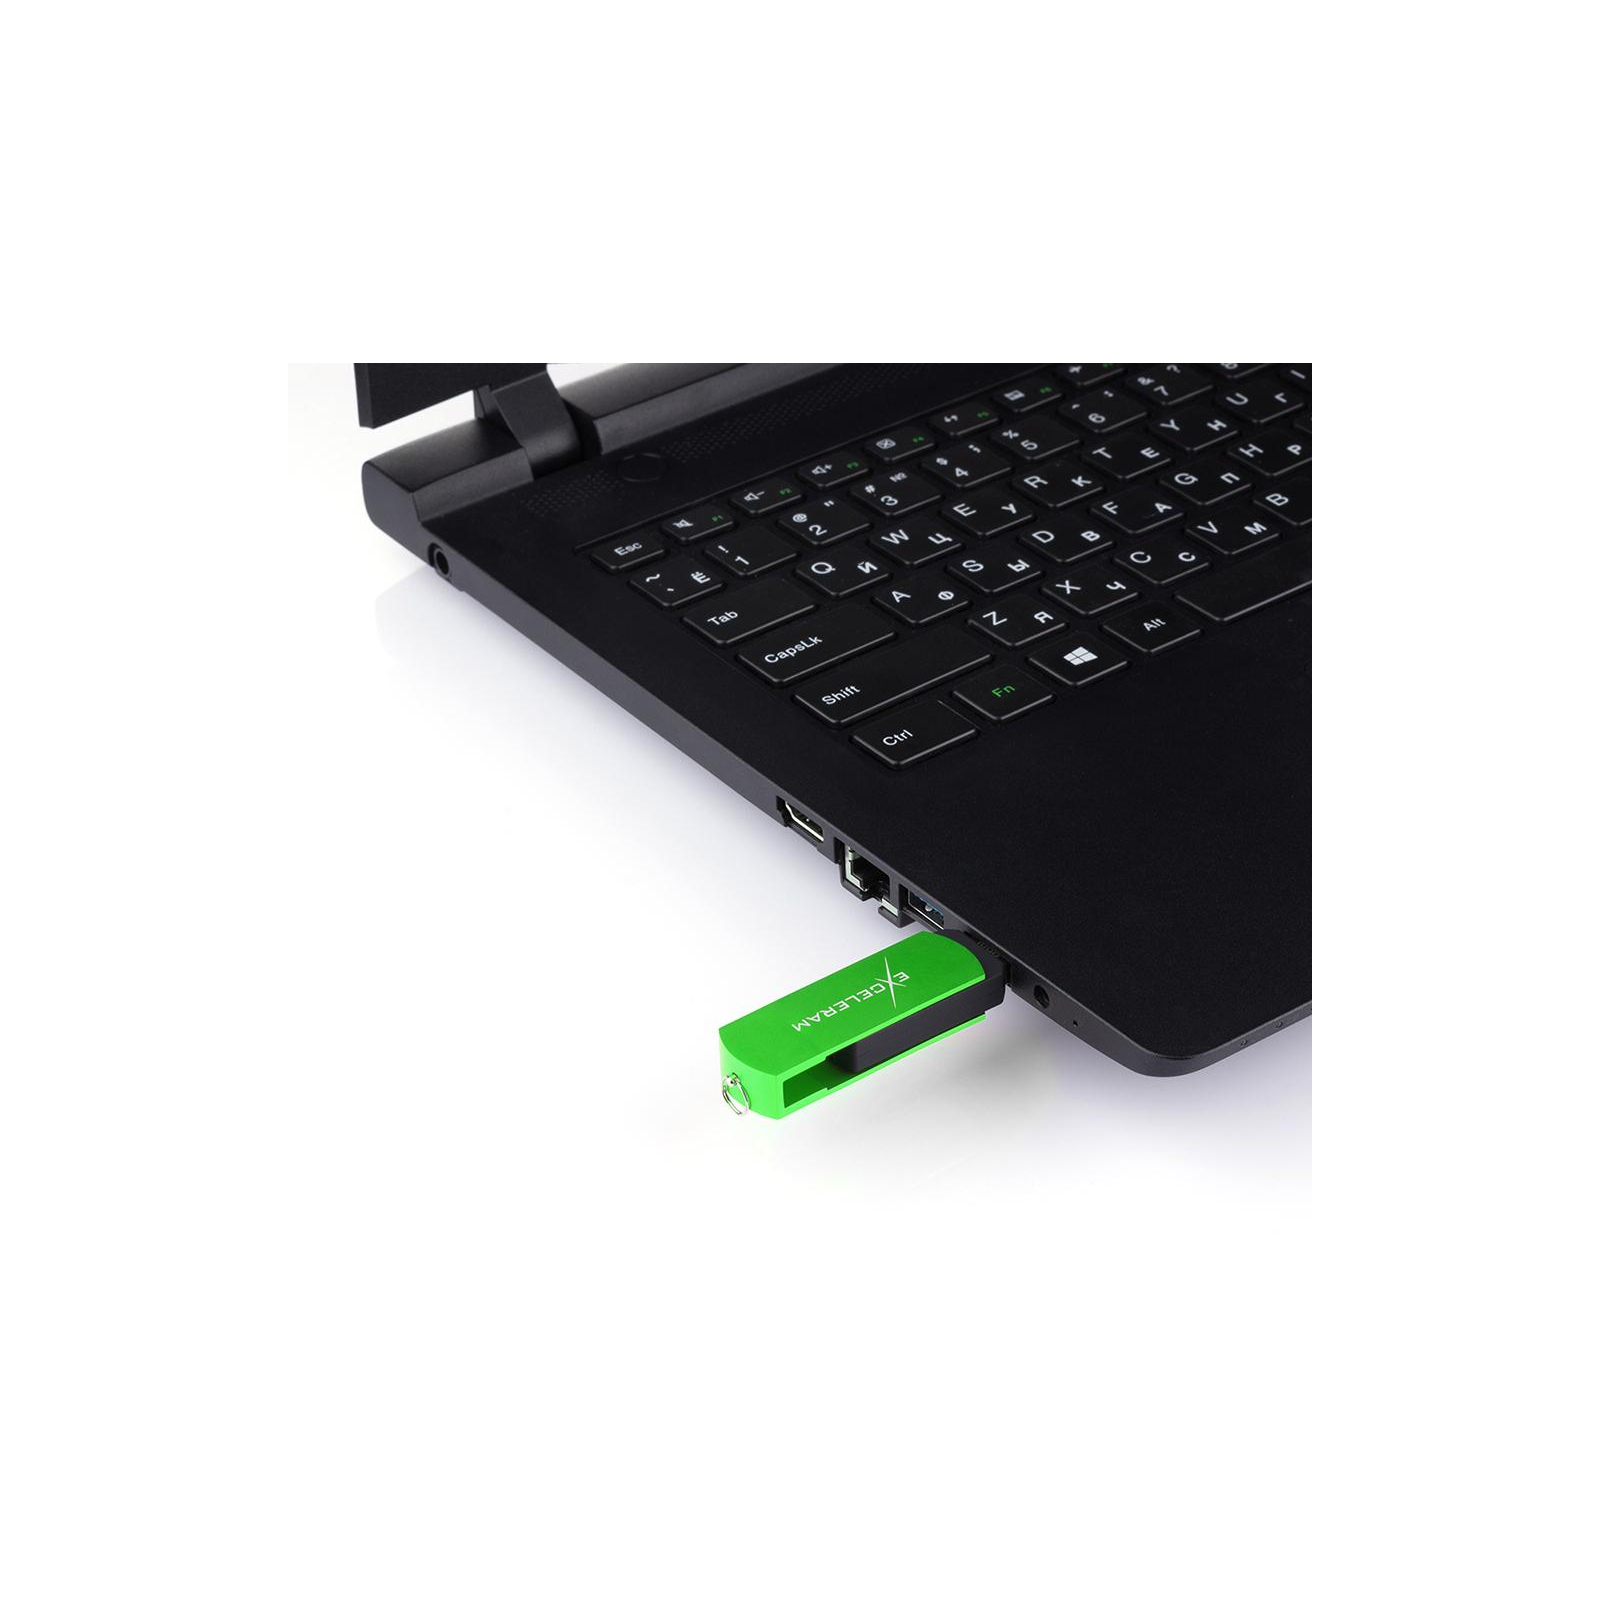 USB флеш накопитель eXceleram 16GB P2 Series Green/Black USB 2.0 (EXP2U2GRB16) изображение 7